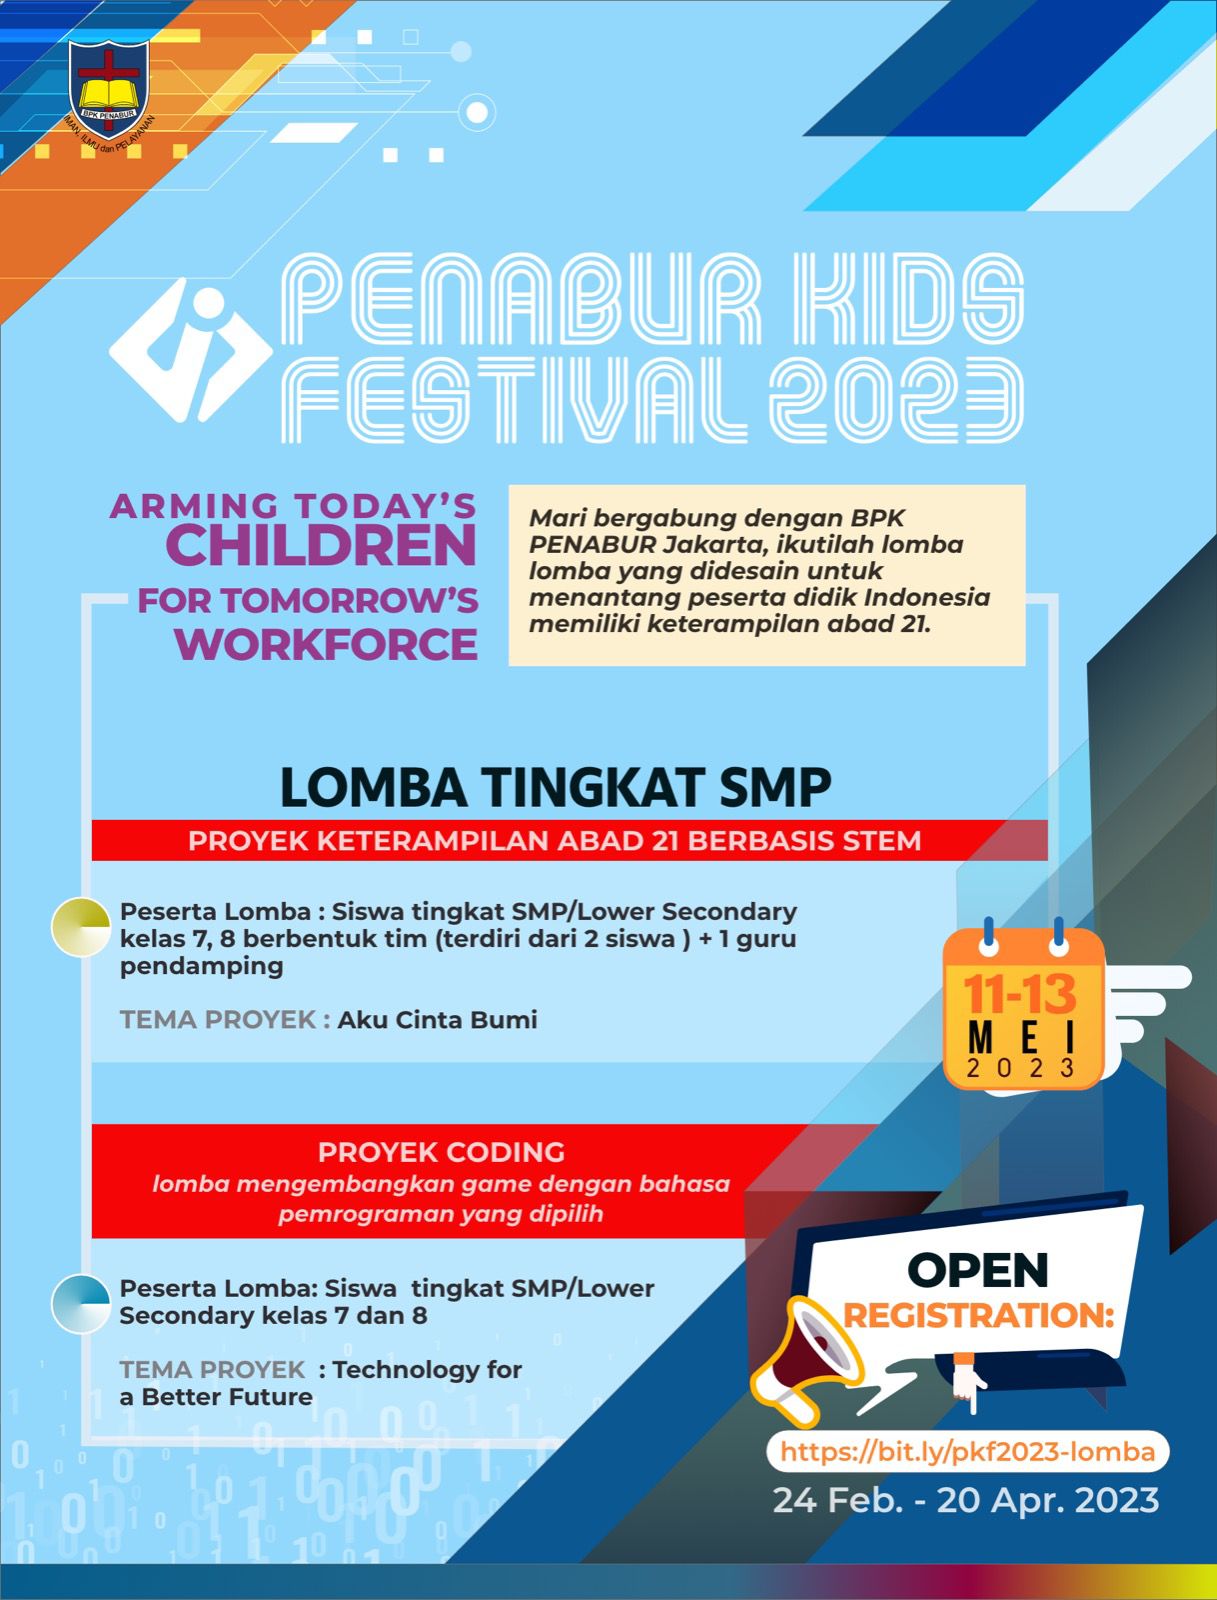 PENABUR Kids Festival 2023 "Arming Today's Children for Tomorrow's Workforce" Tingkat SMP